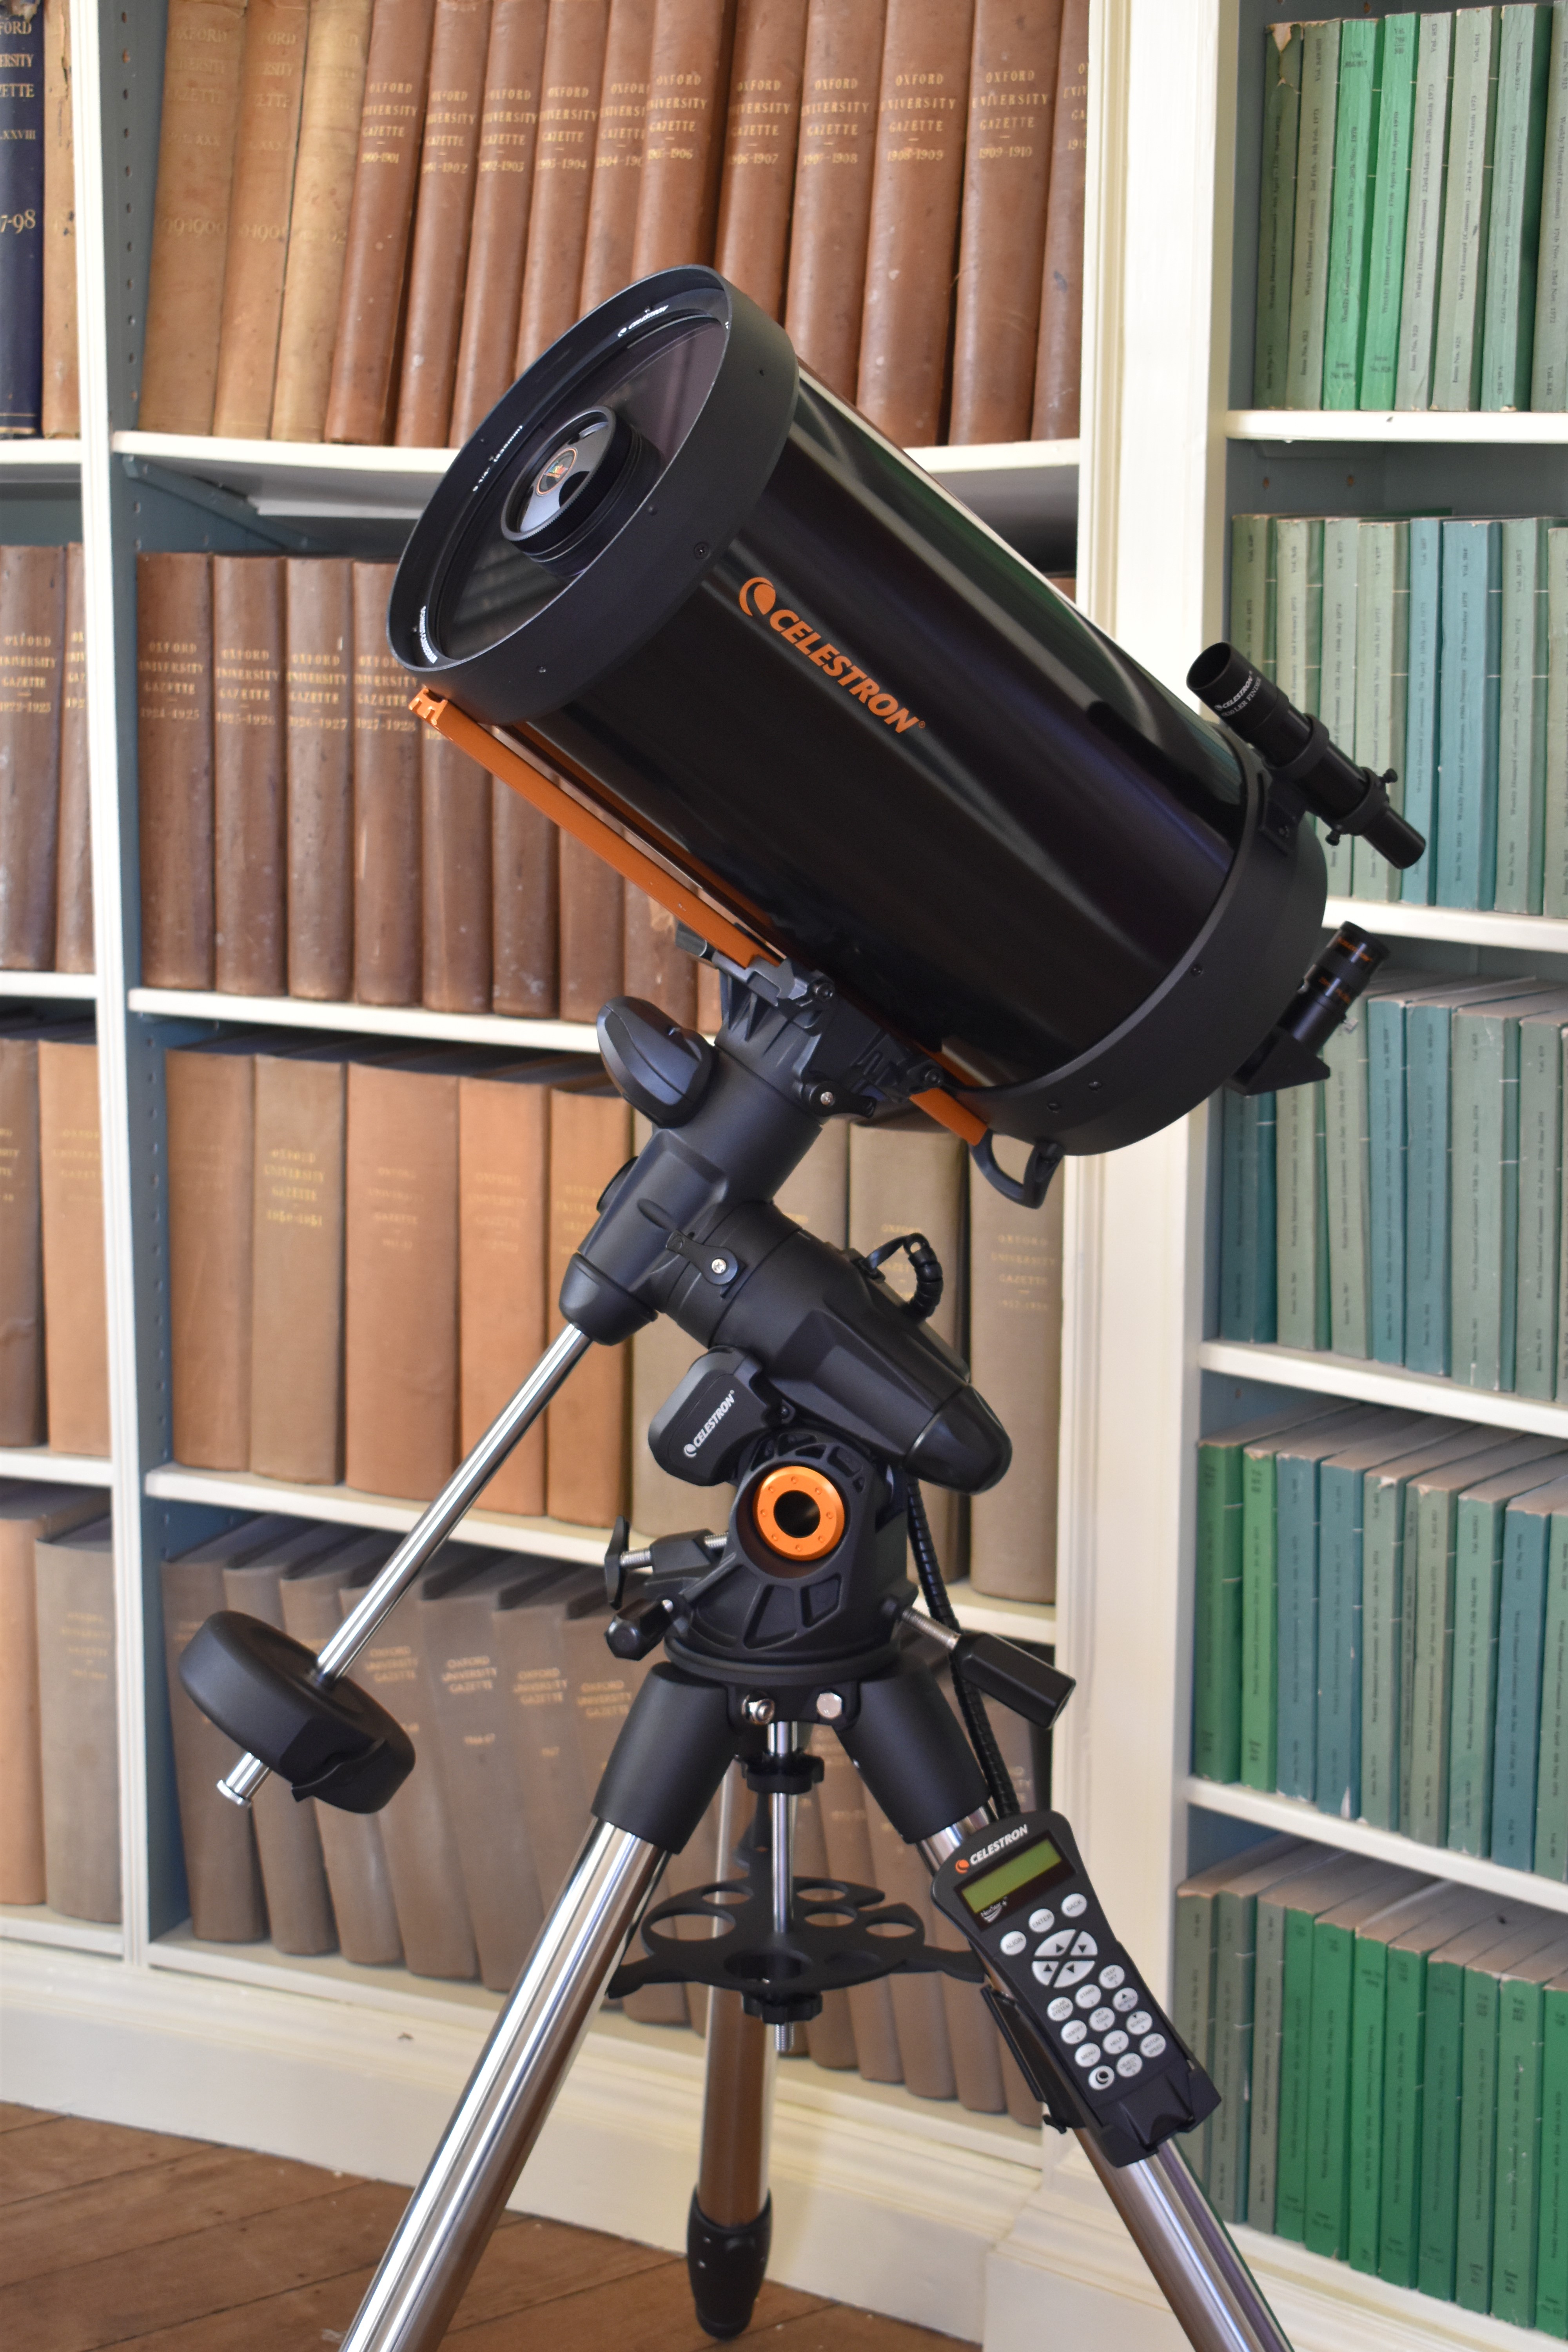 The new Celestron Advanced VX-925 telescope